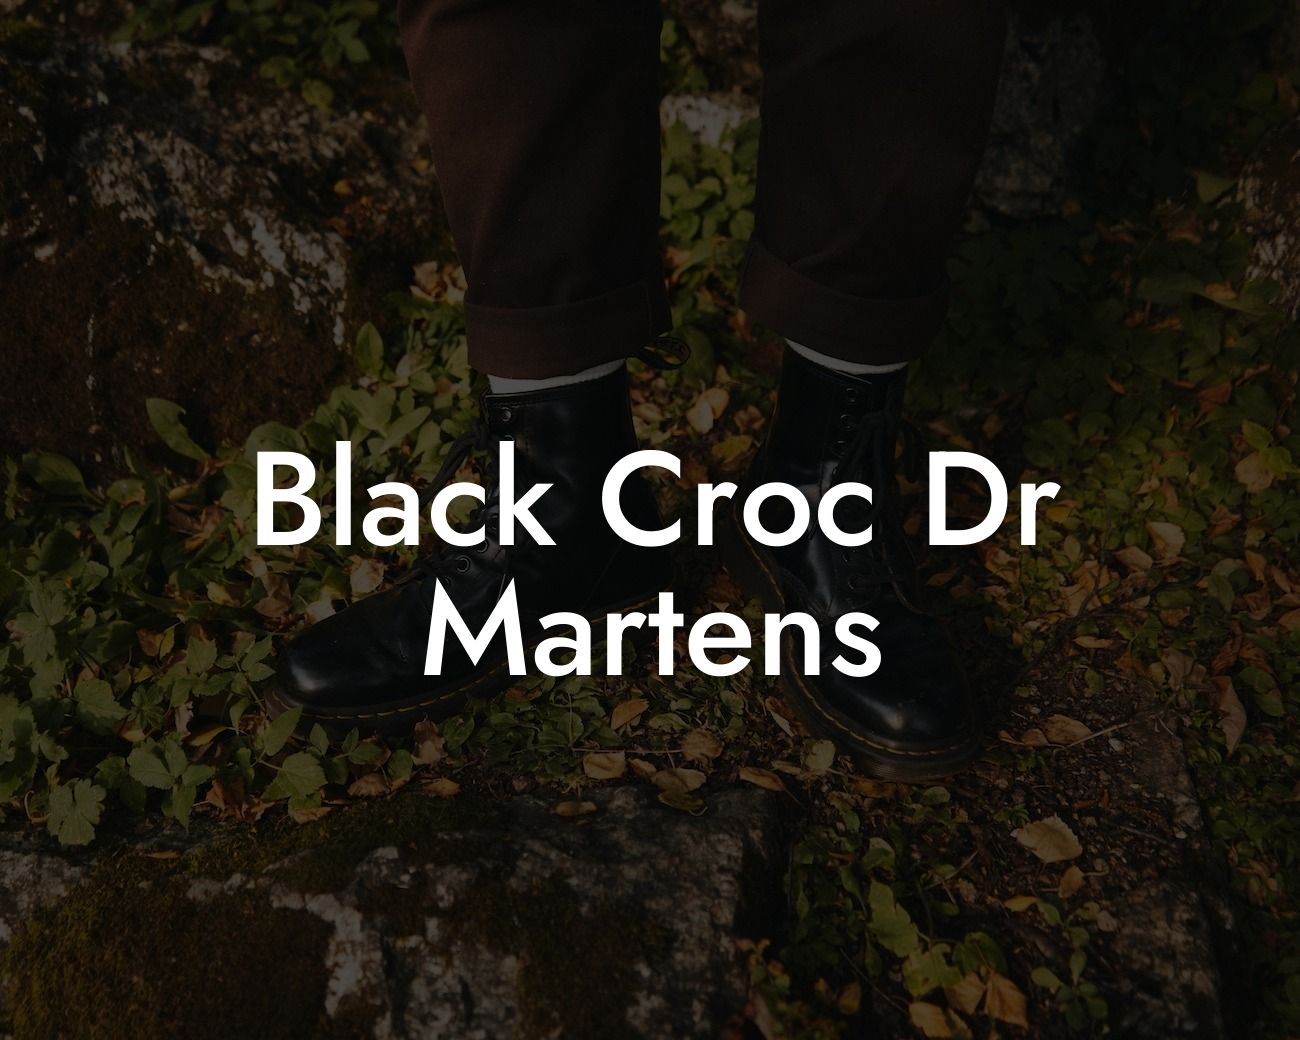 Black Croc Dr Martens